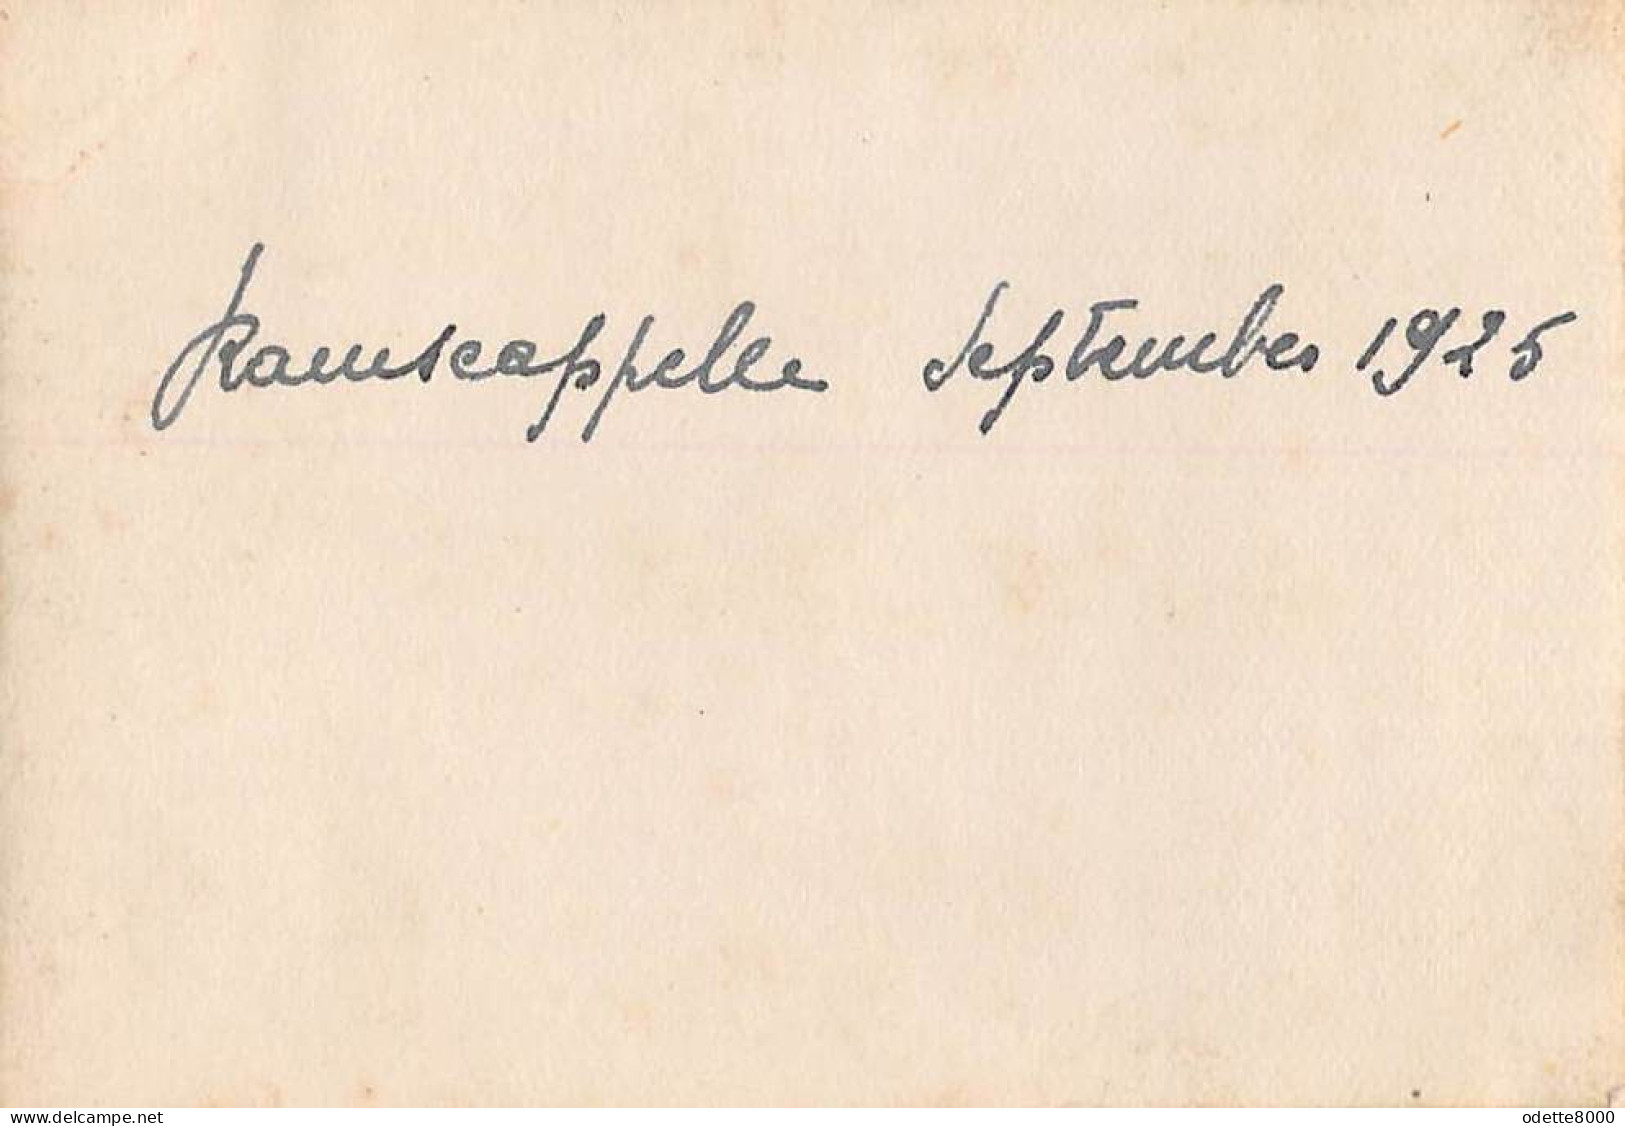 Bijart Snooker Driebanden  Echte Foto Uit Ramskapelle Knokke Heist  6 X 8,5 Cm  Anno 1925   Geen Postkaart!  D 3324 - Knokke